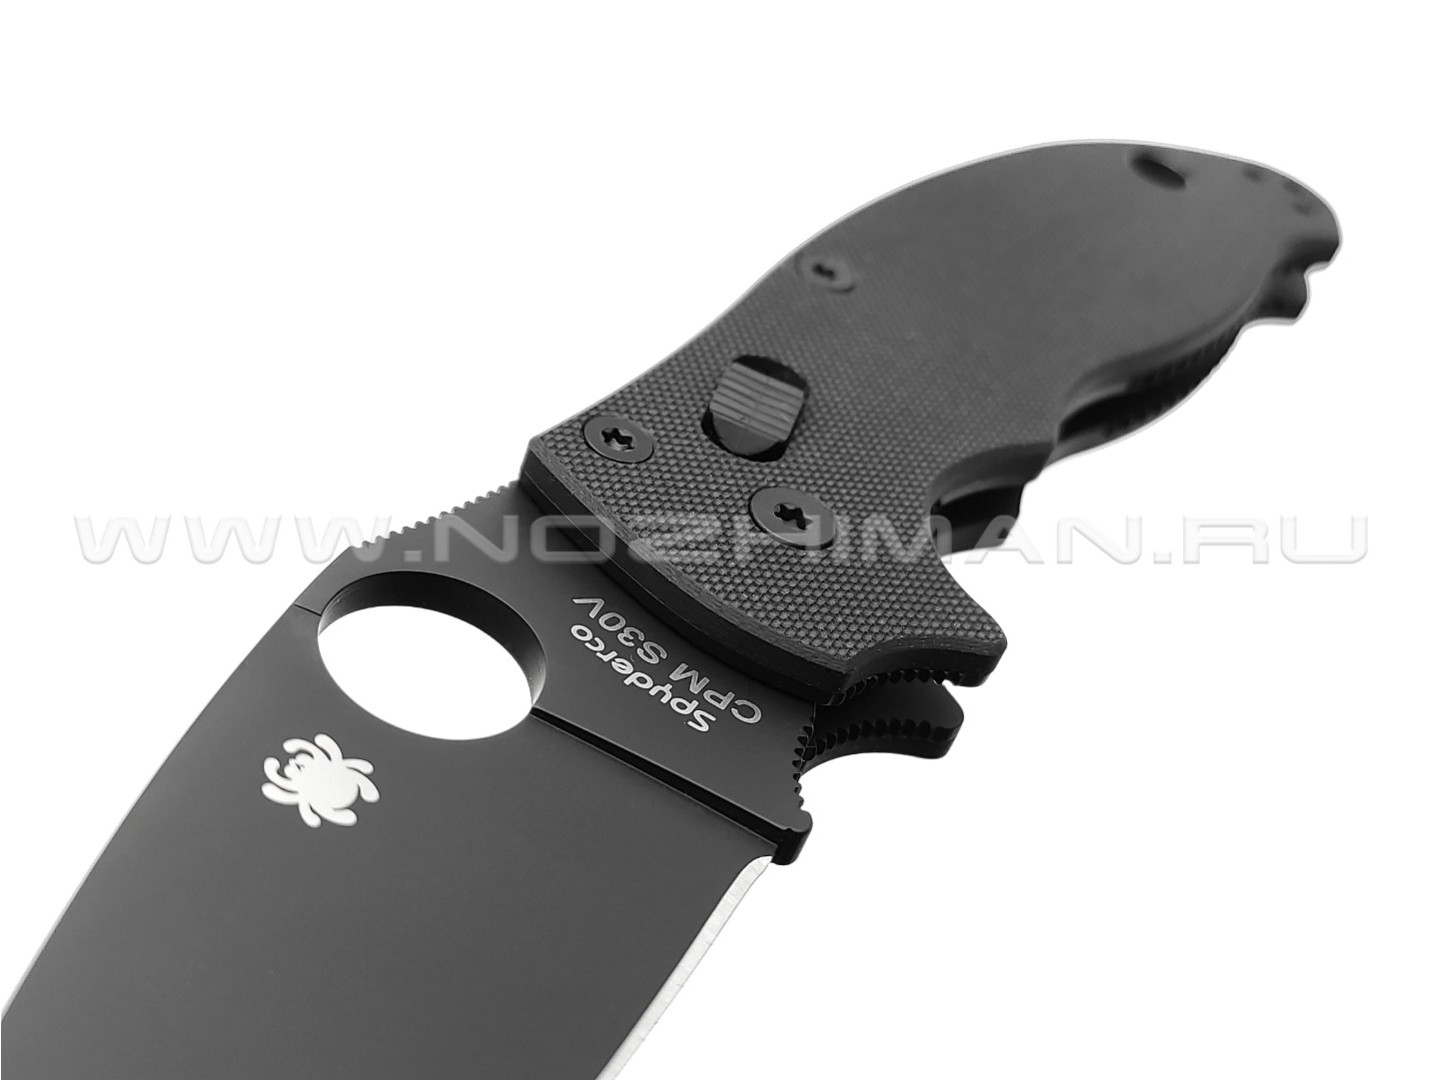 Нож Spyderco Manix 2 Black C101GPBBK2 сталь CPM S30V DLC, рукоять G10